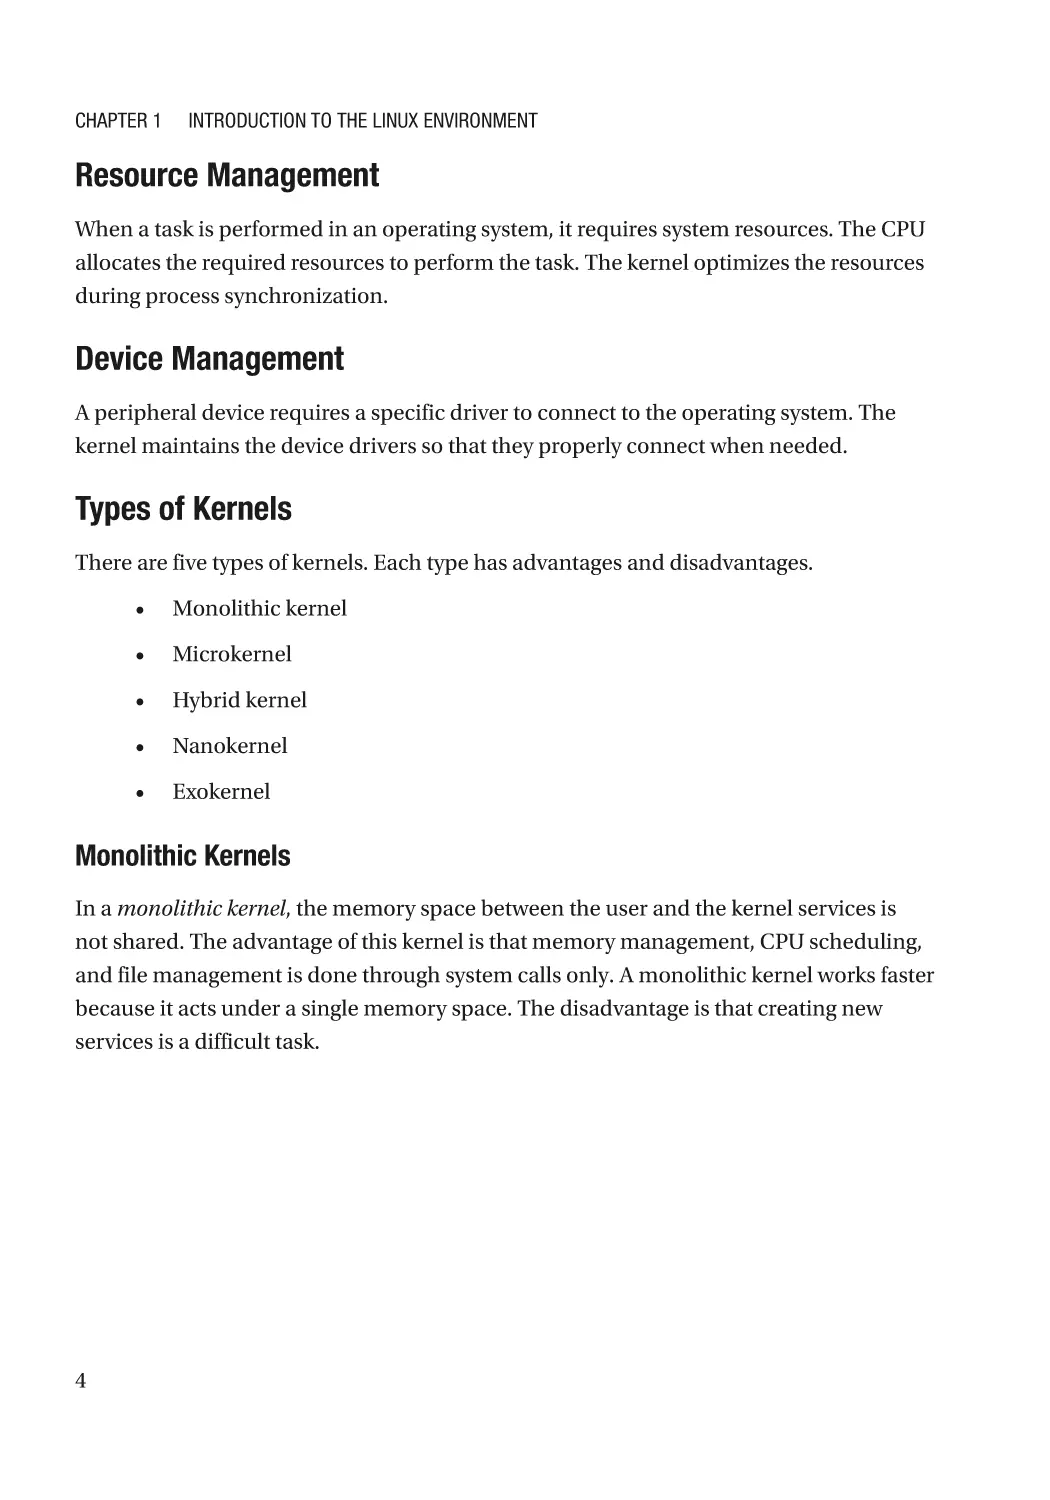 Resource Management
Device Management
Types of Kernels
Monolithic Kernels